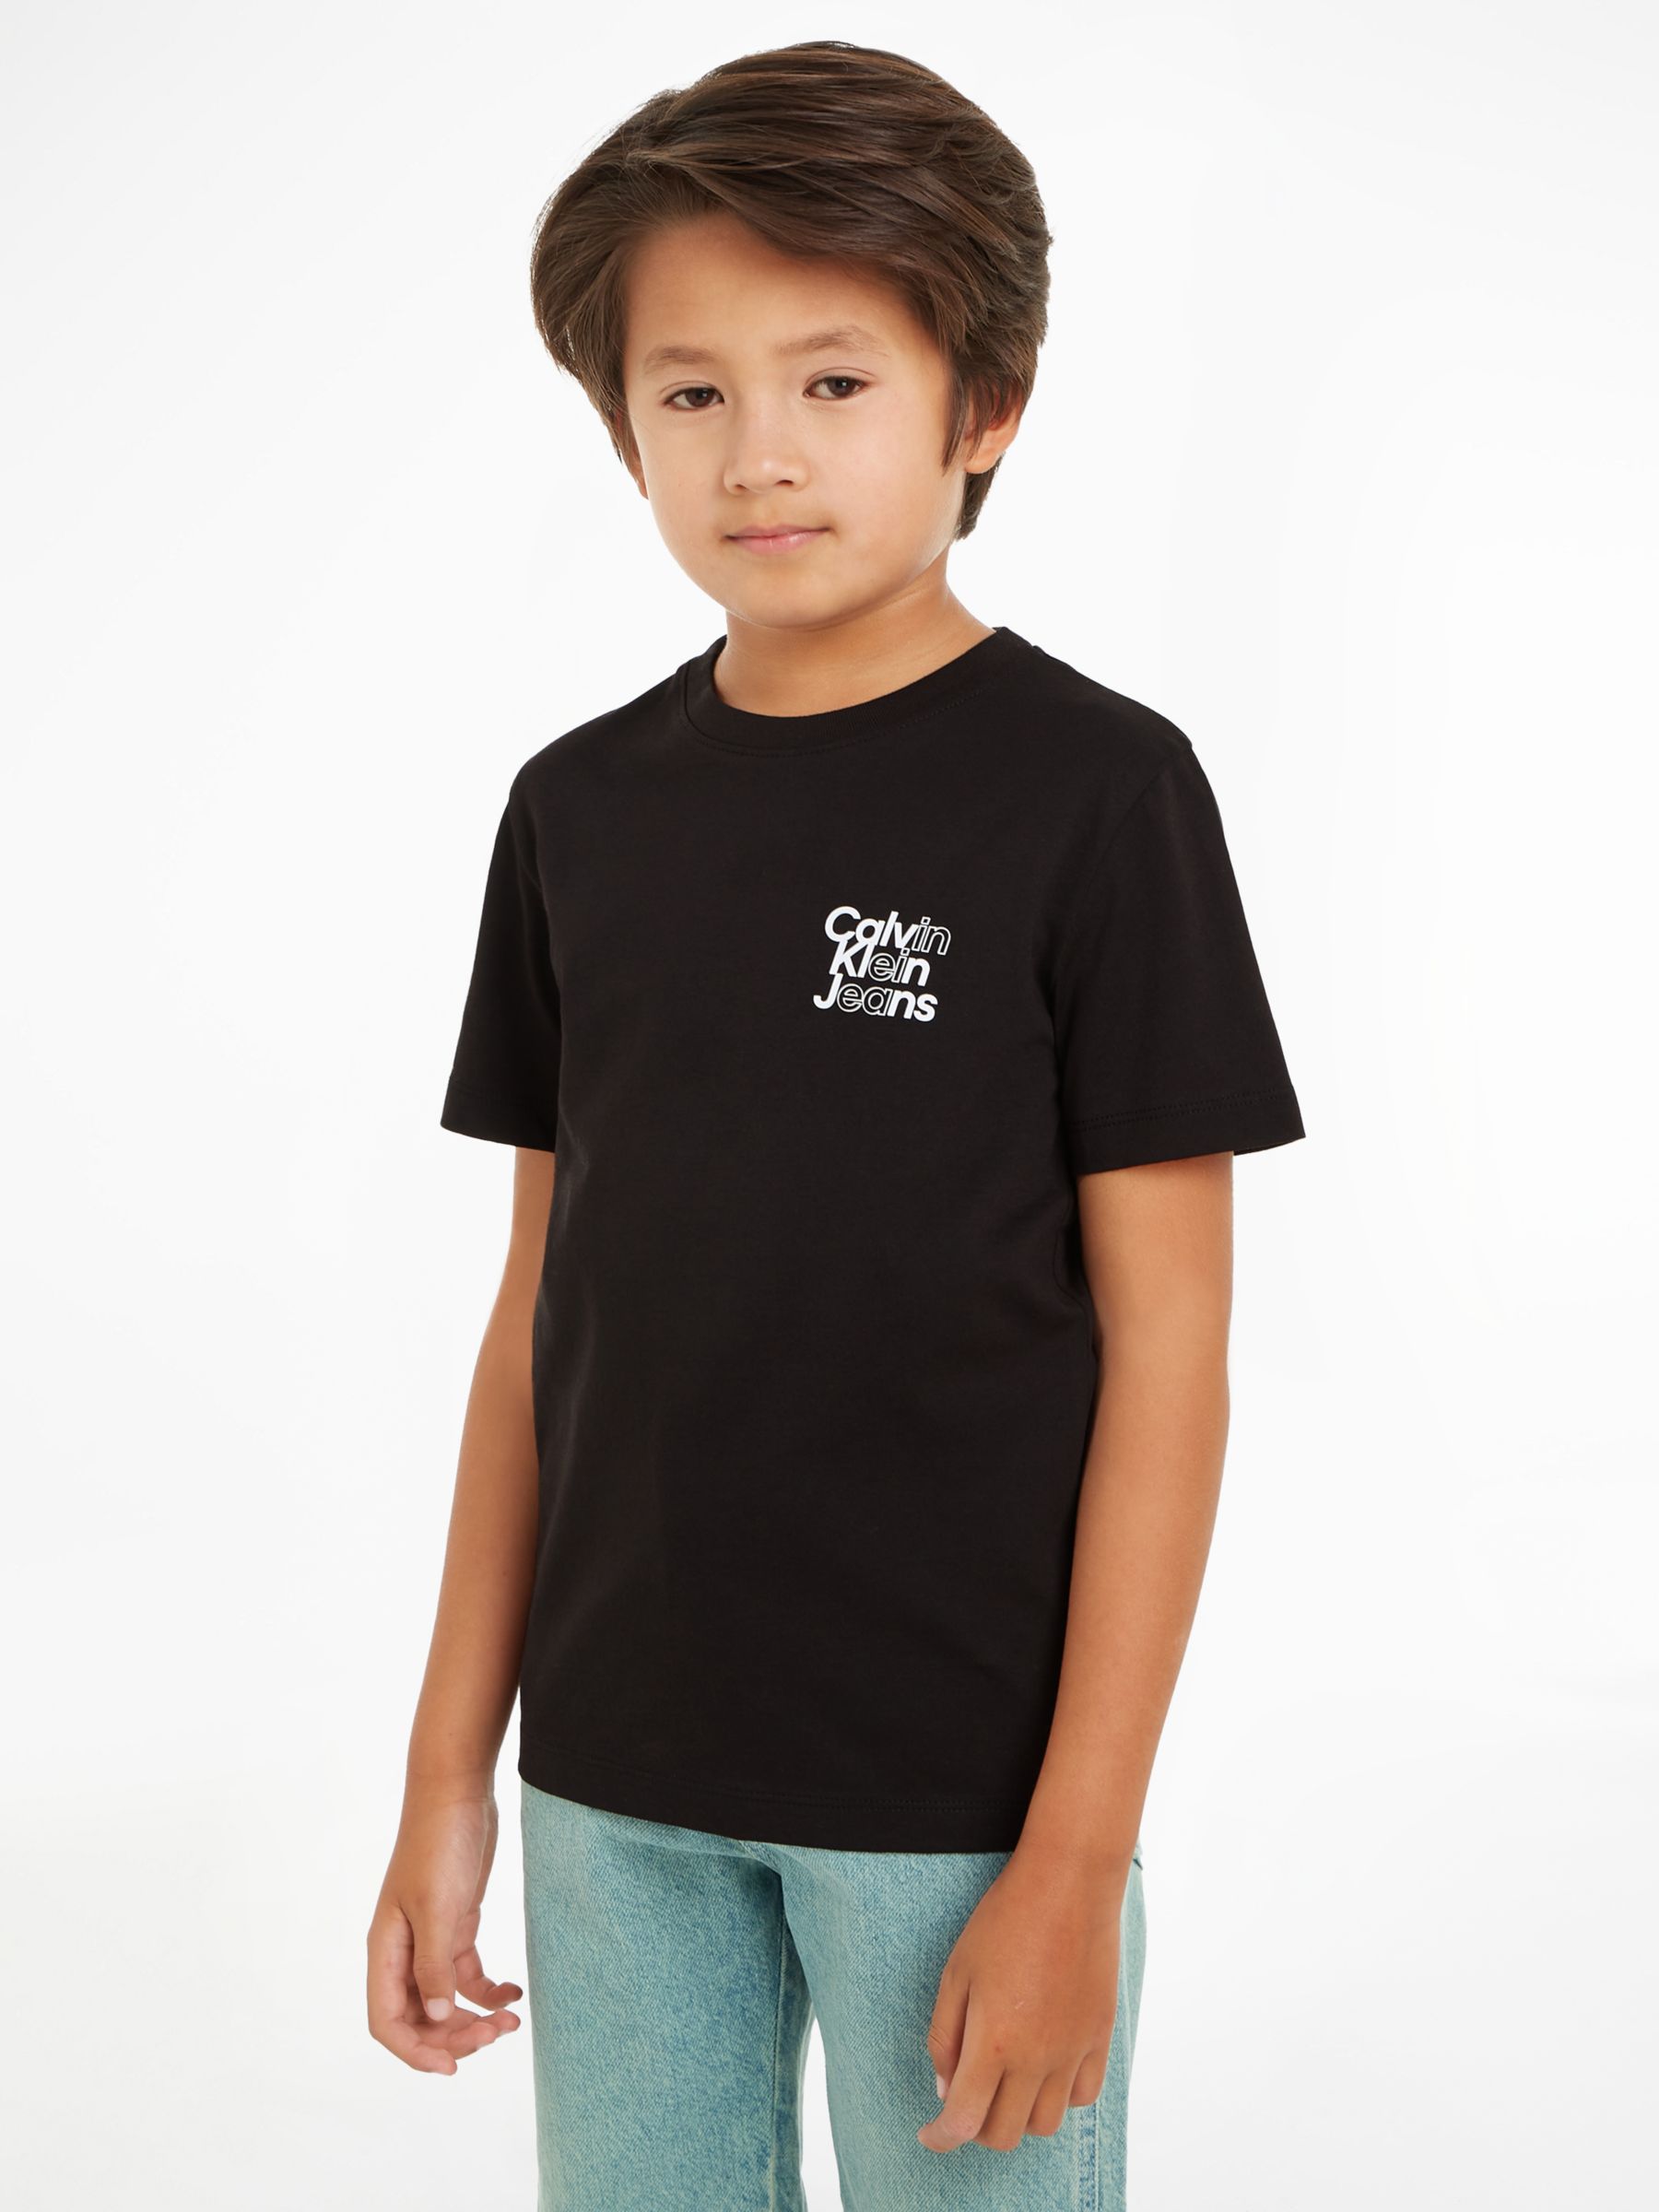 Calvin Klein Comfort T-Shirt, Black at John Lewis & Partners